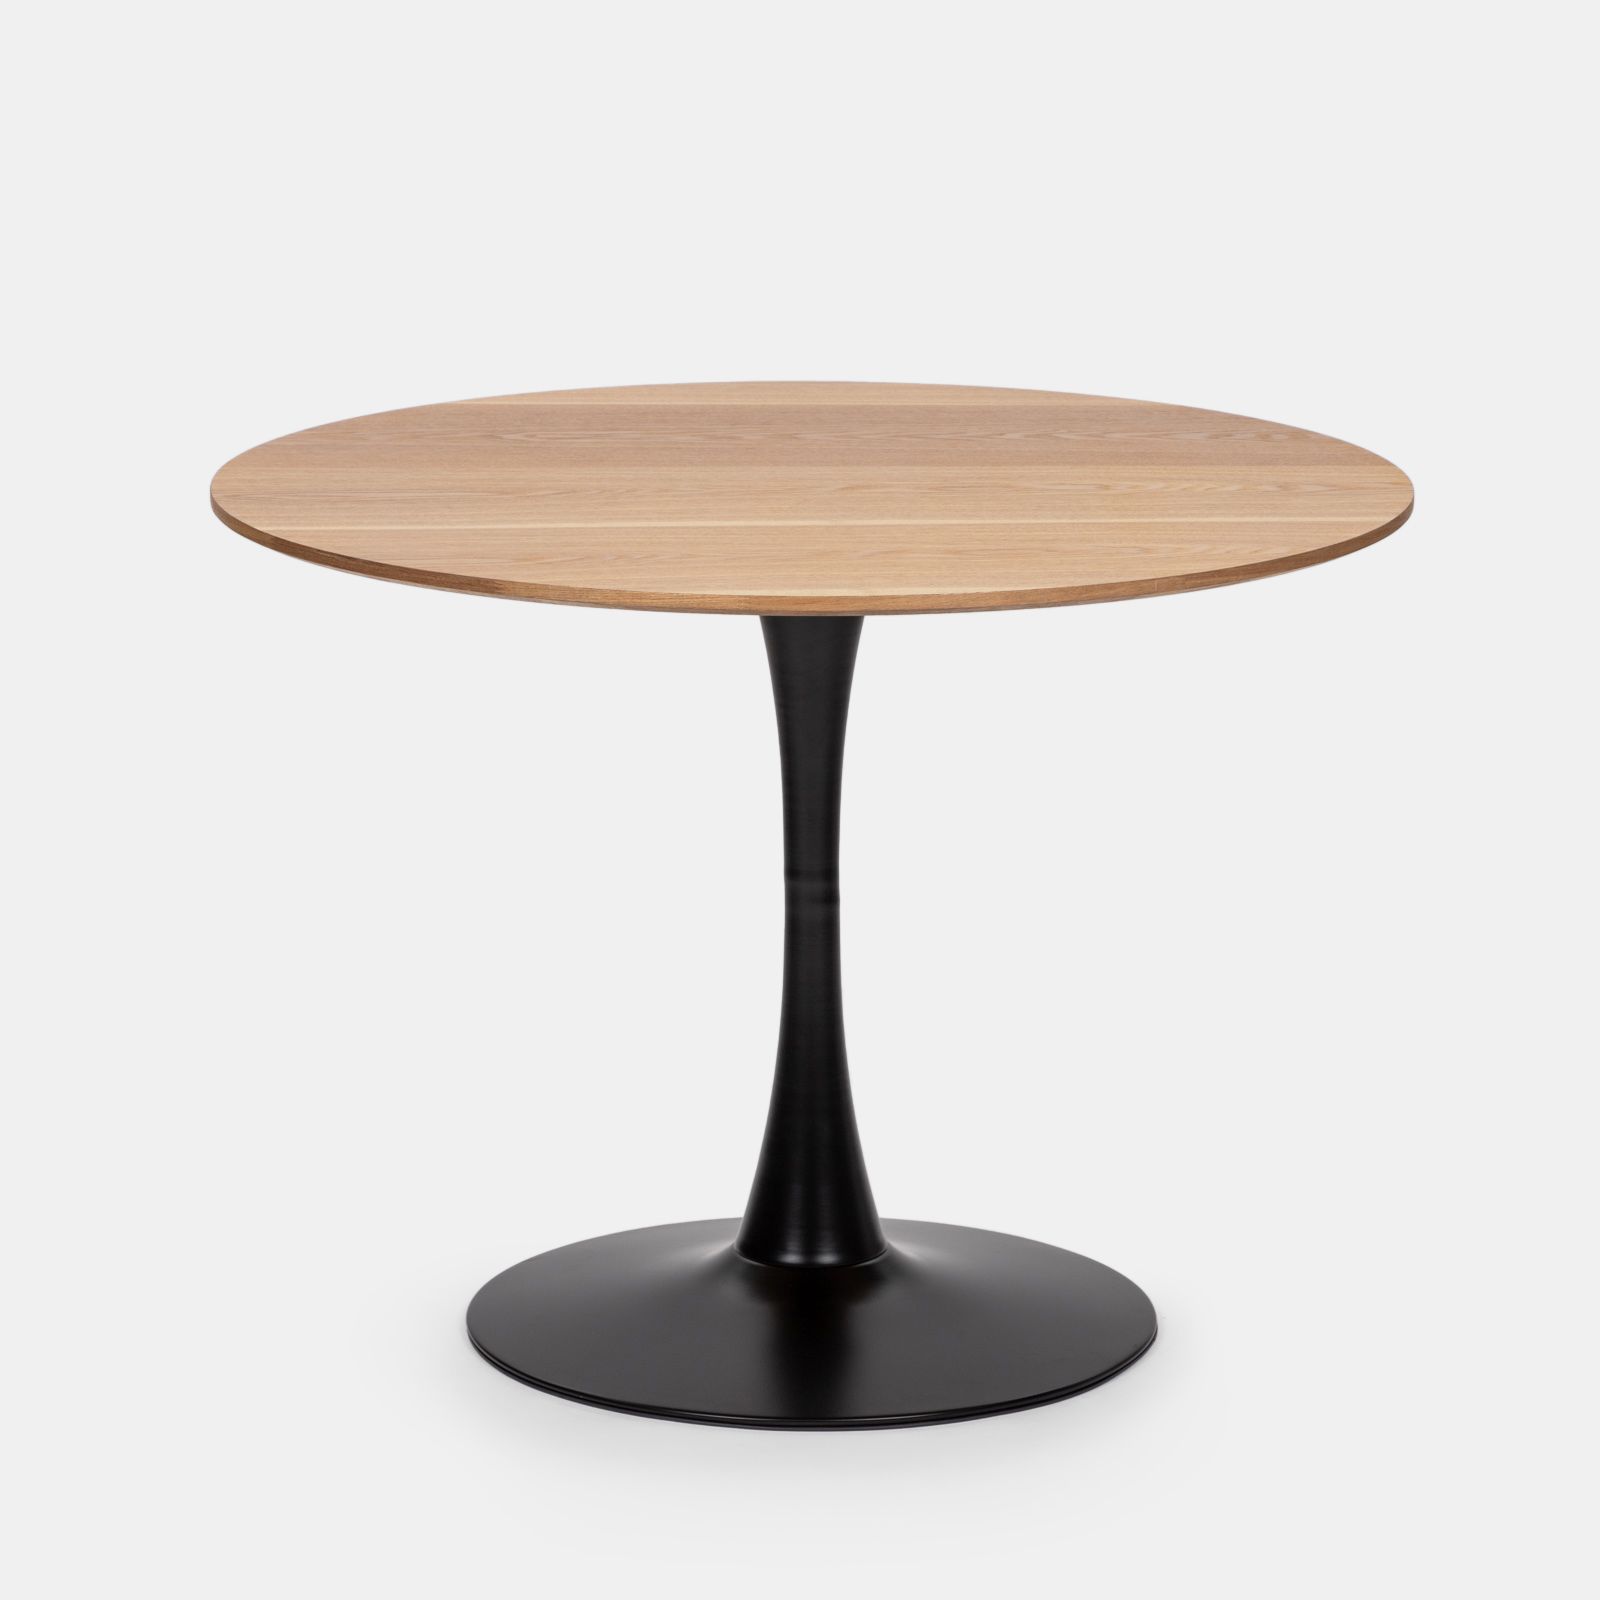 Tavolo rotondo alto Woody - diametro 100 cm - H 105 cm - rovere/ner